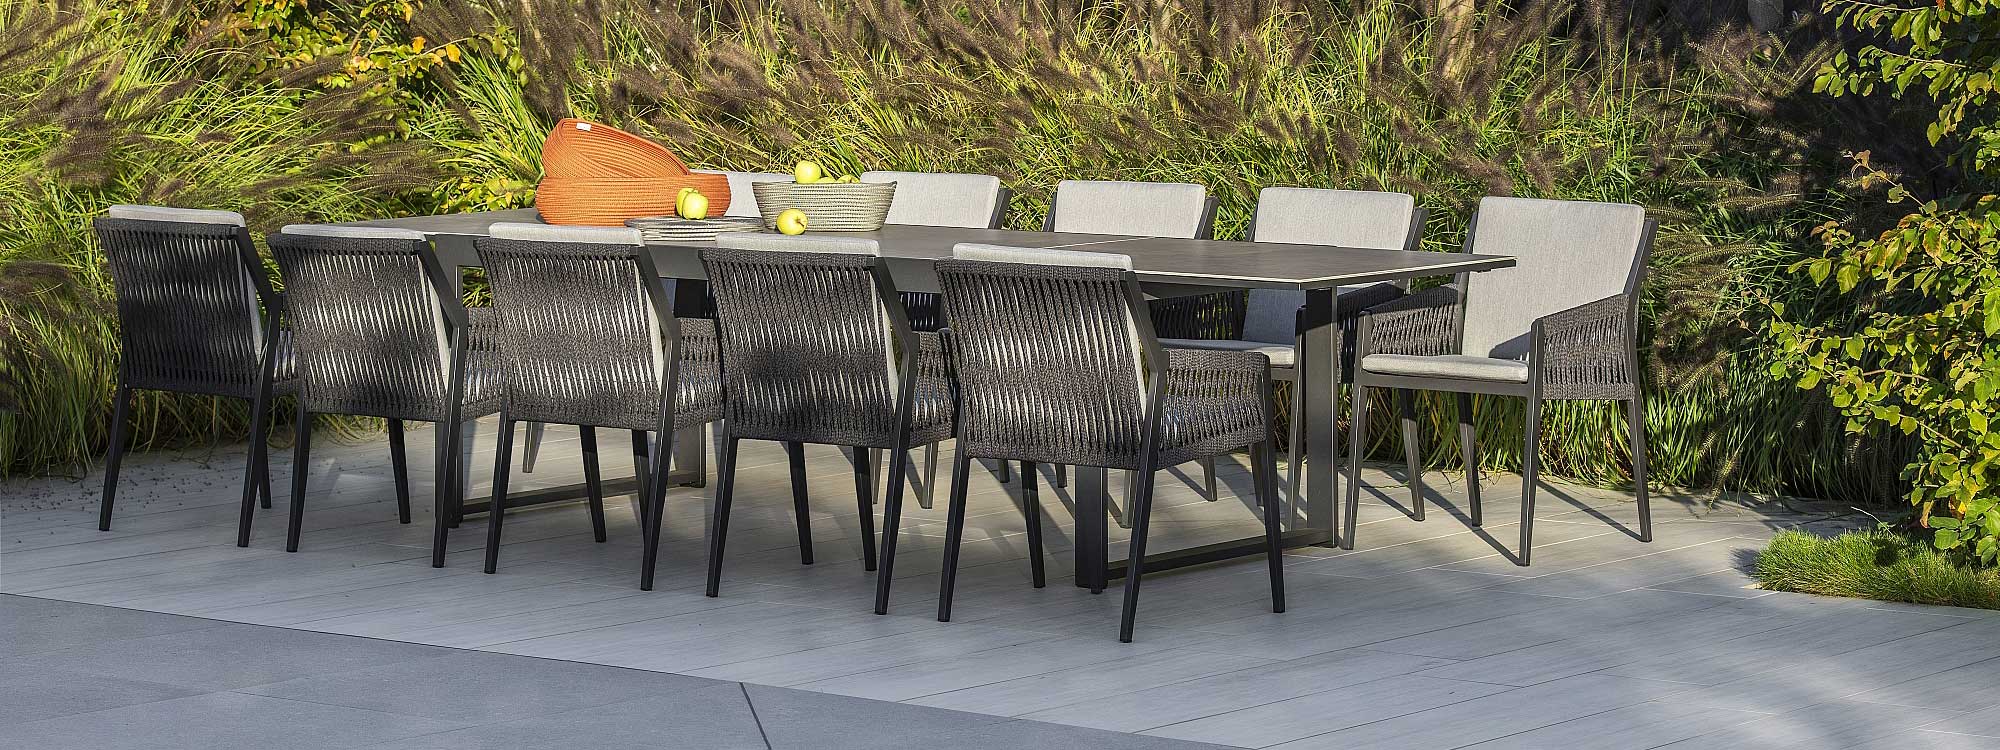 Image of Vigo XL black extending garden table with dark marble ceramic top, shown with 10 Ritz contemporary garden chairs by Jati & Kebon